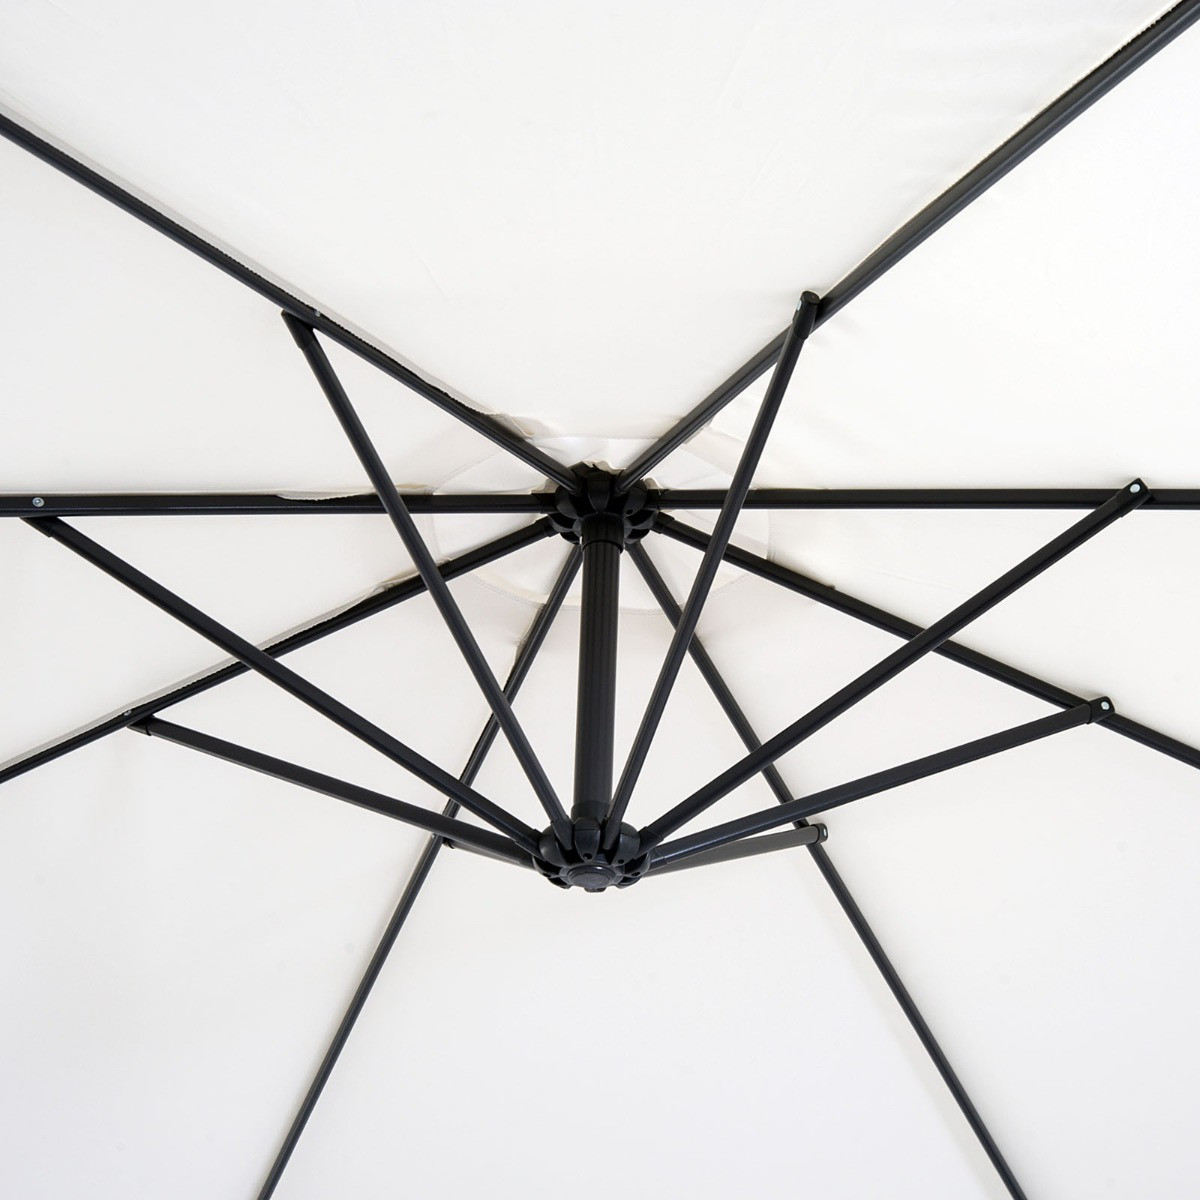 Outsunny Cantilever Parasol Umbrella, Cream - 3M>